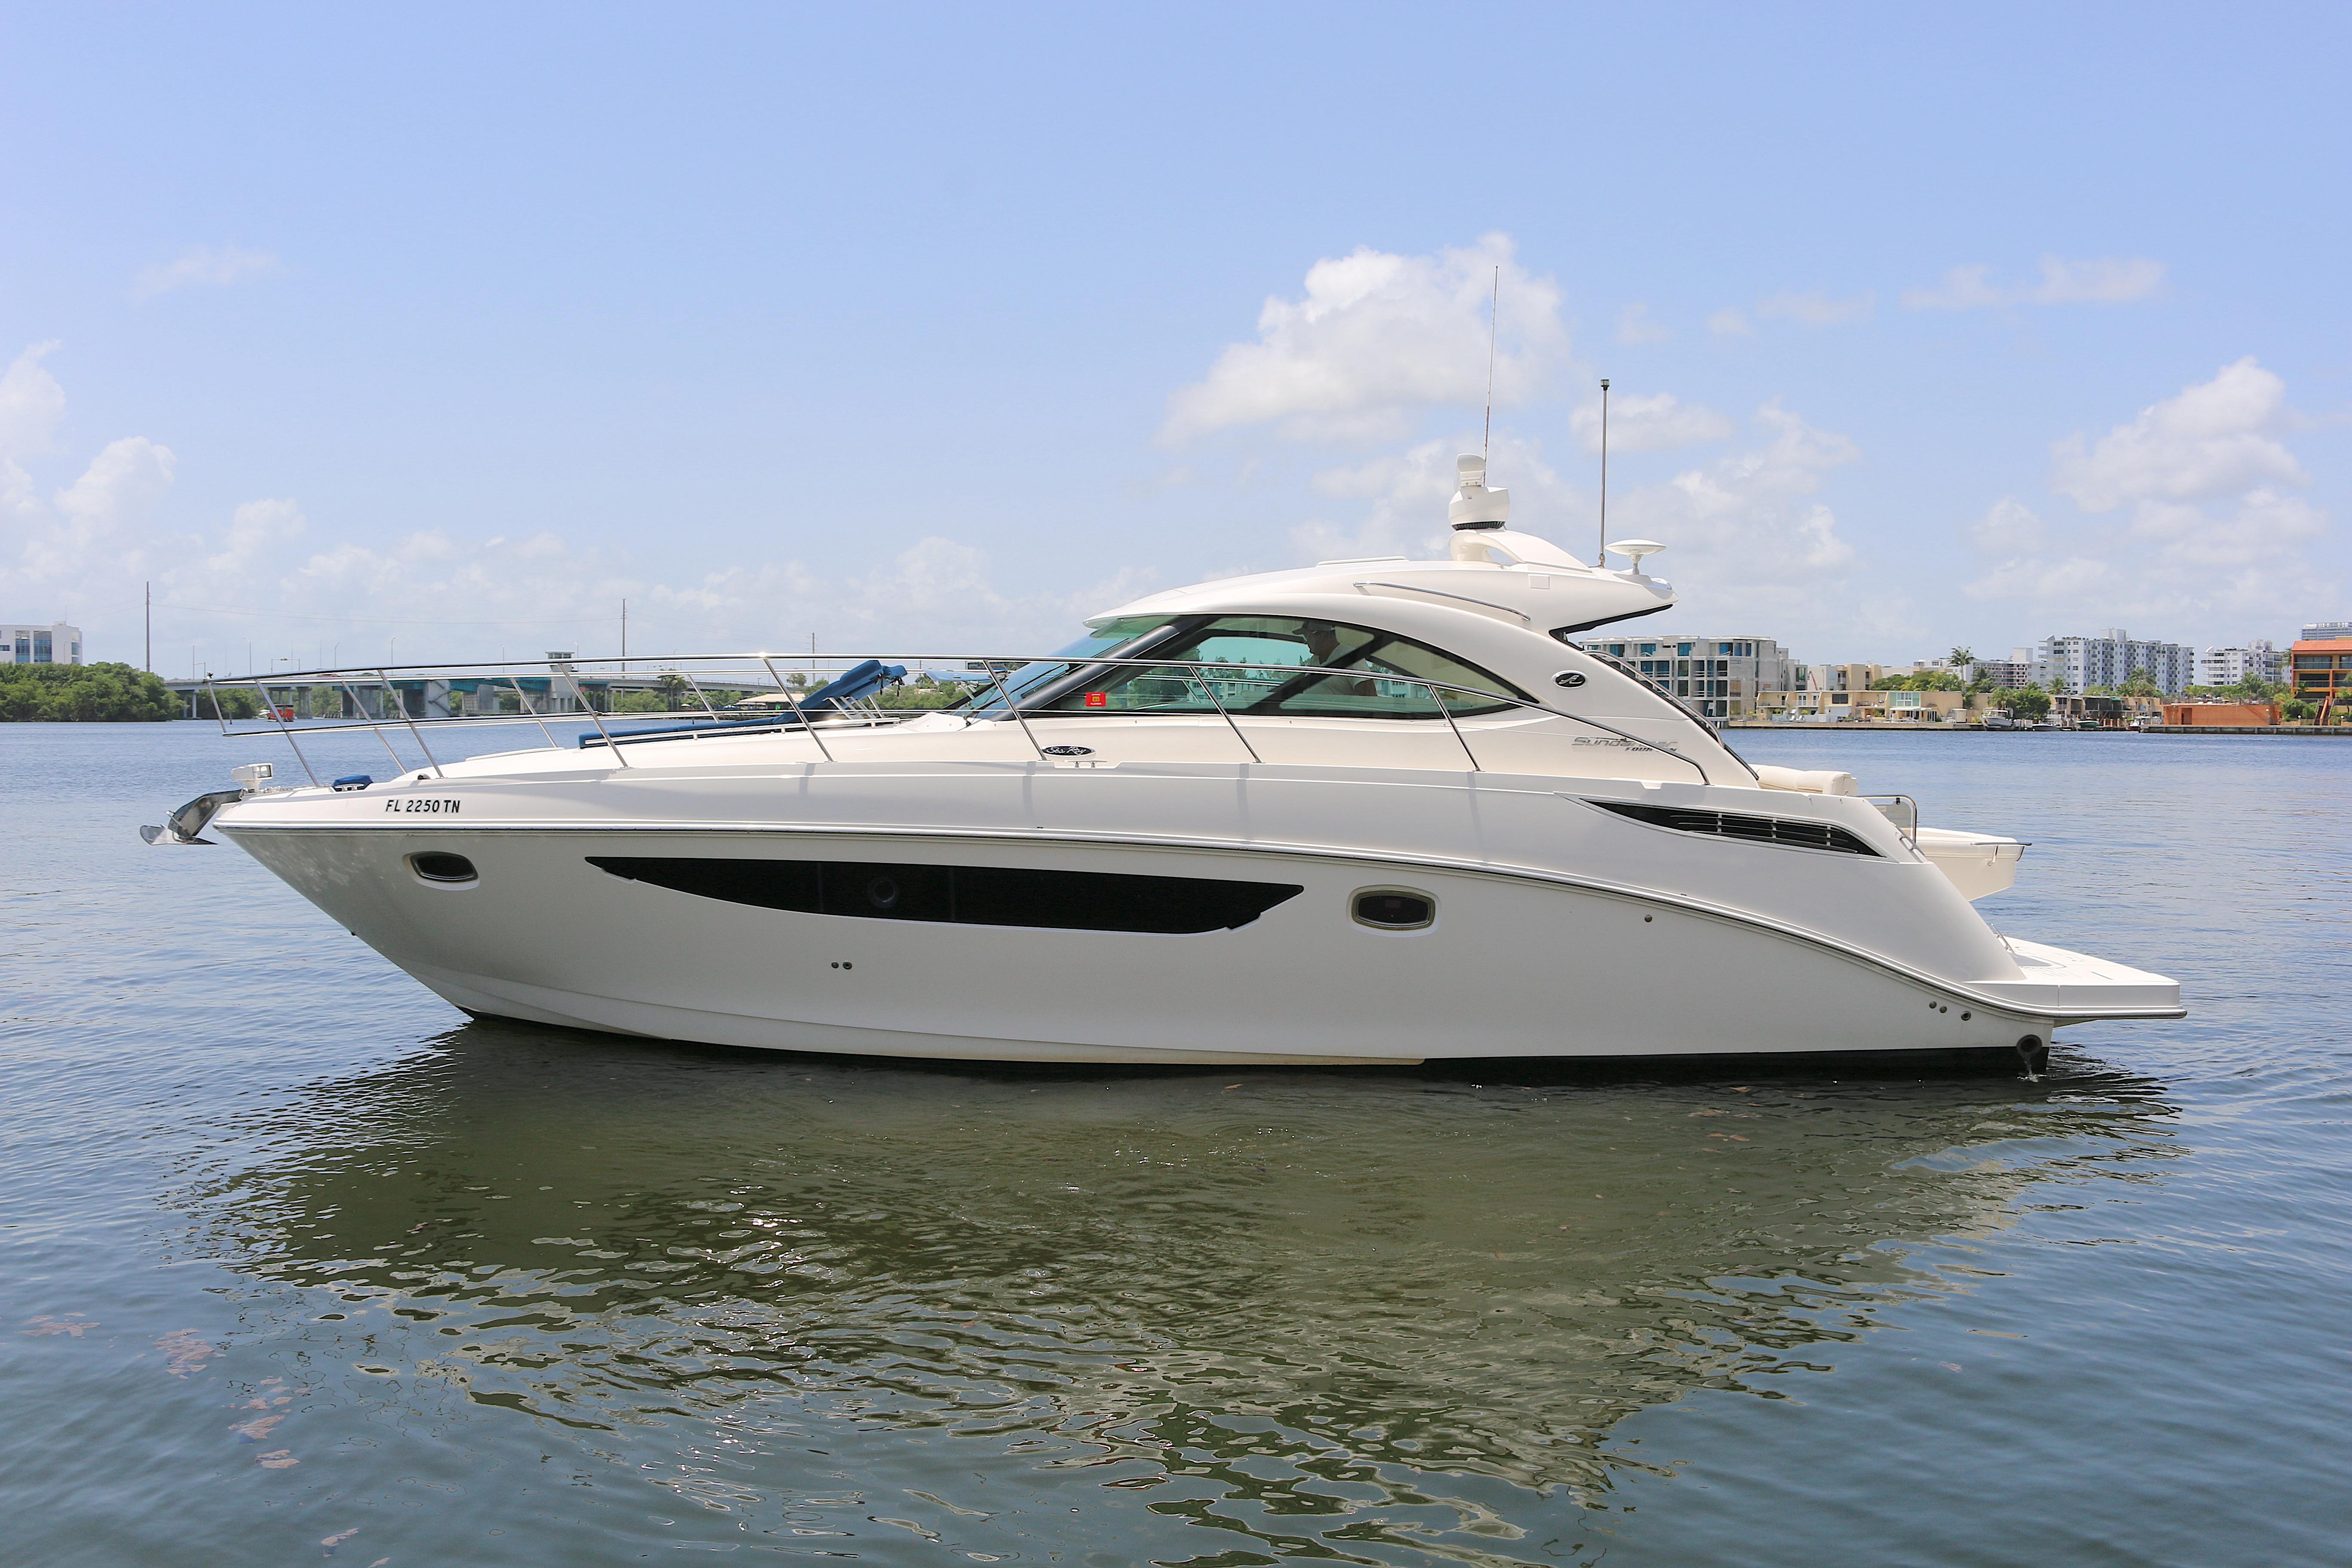 Sea Dreams Yacht for Sale  42 Sea Ray Yachts Sunny Isles, FL